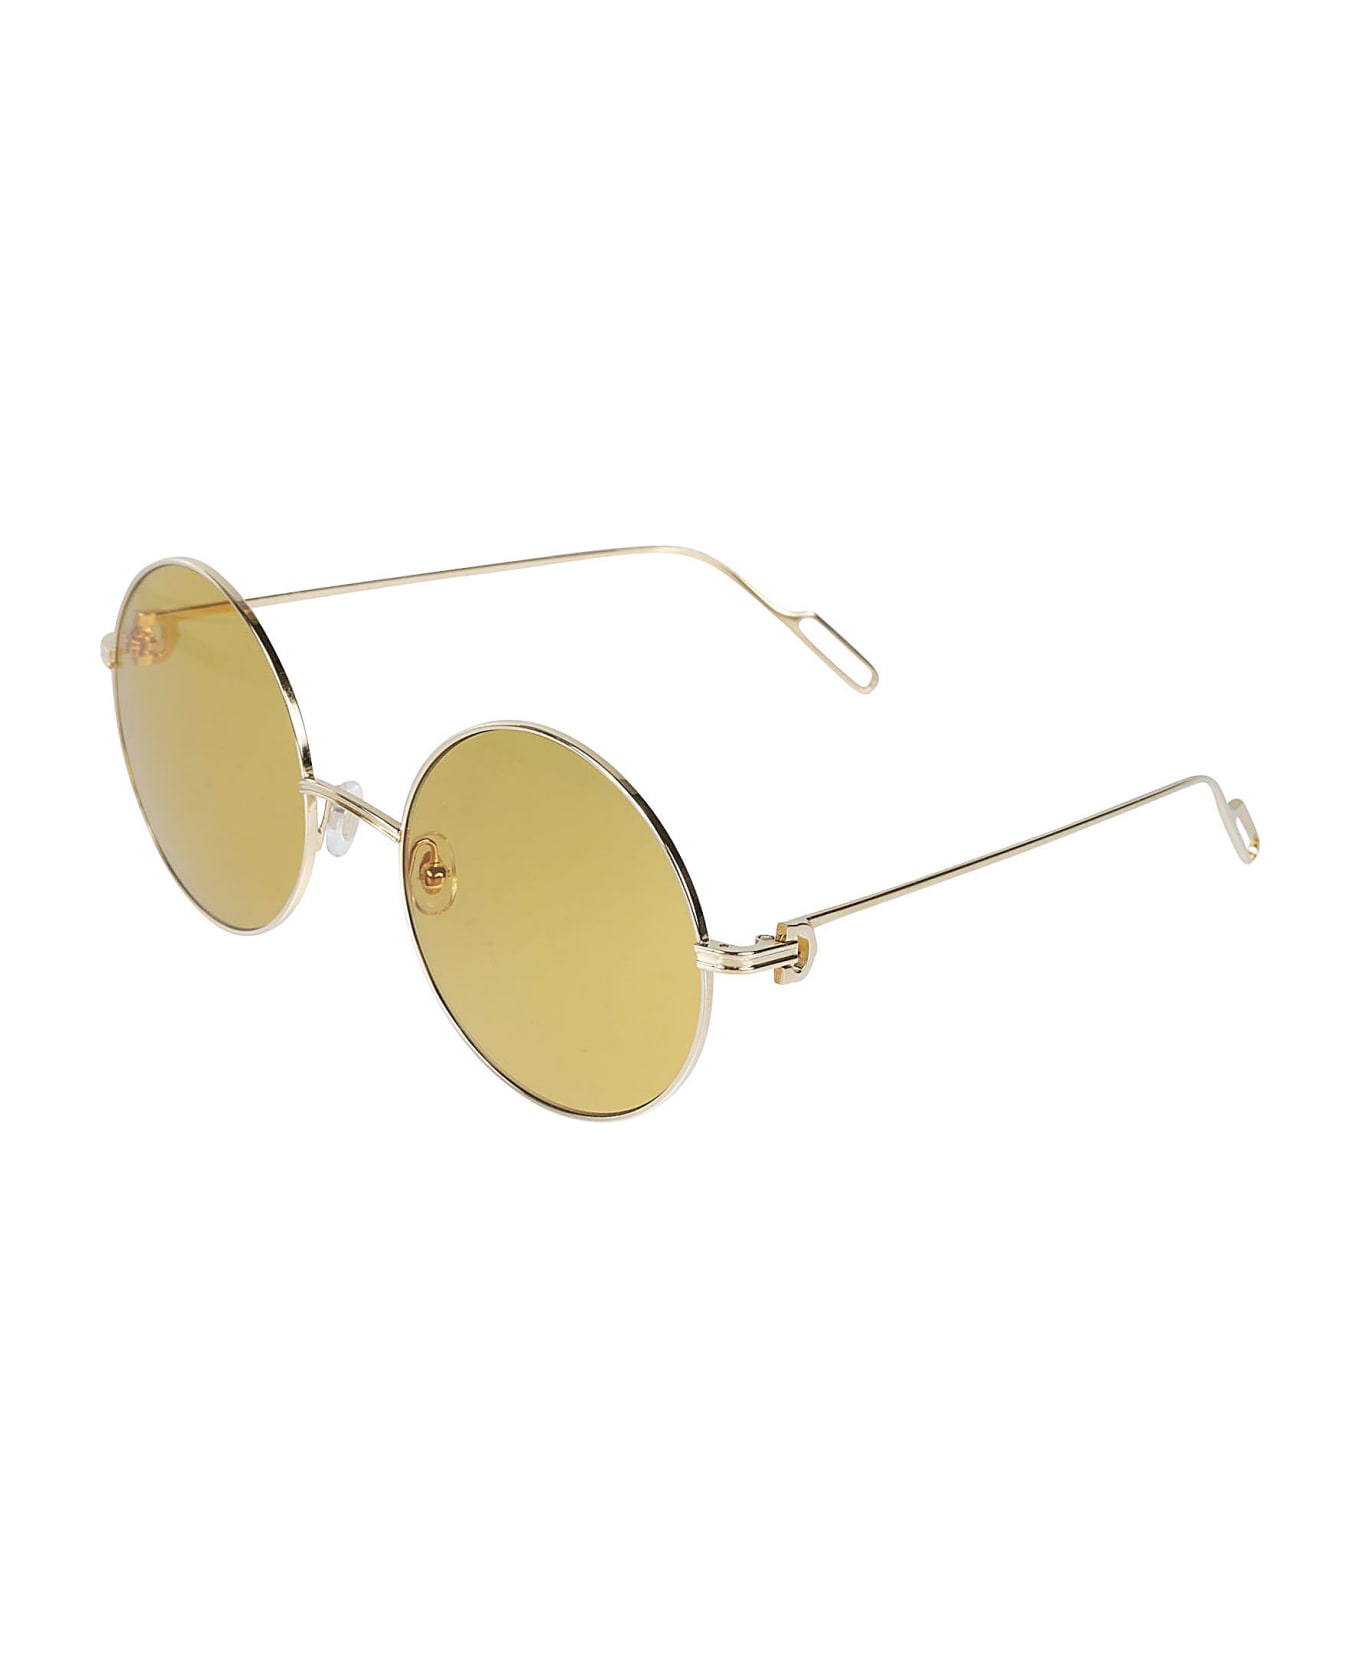 Cartier Eyewear Round Classic Sunglasses - 004 gold gold yellow サングラス